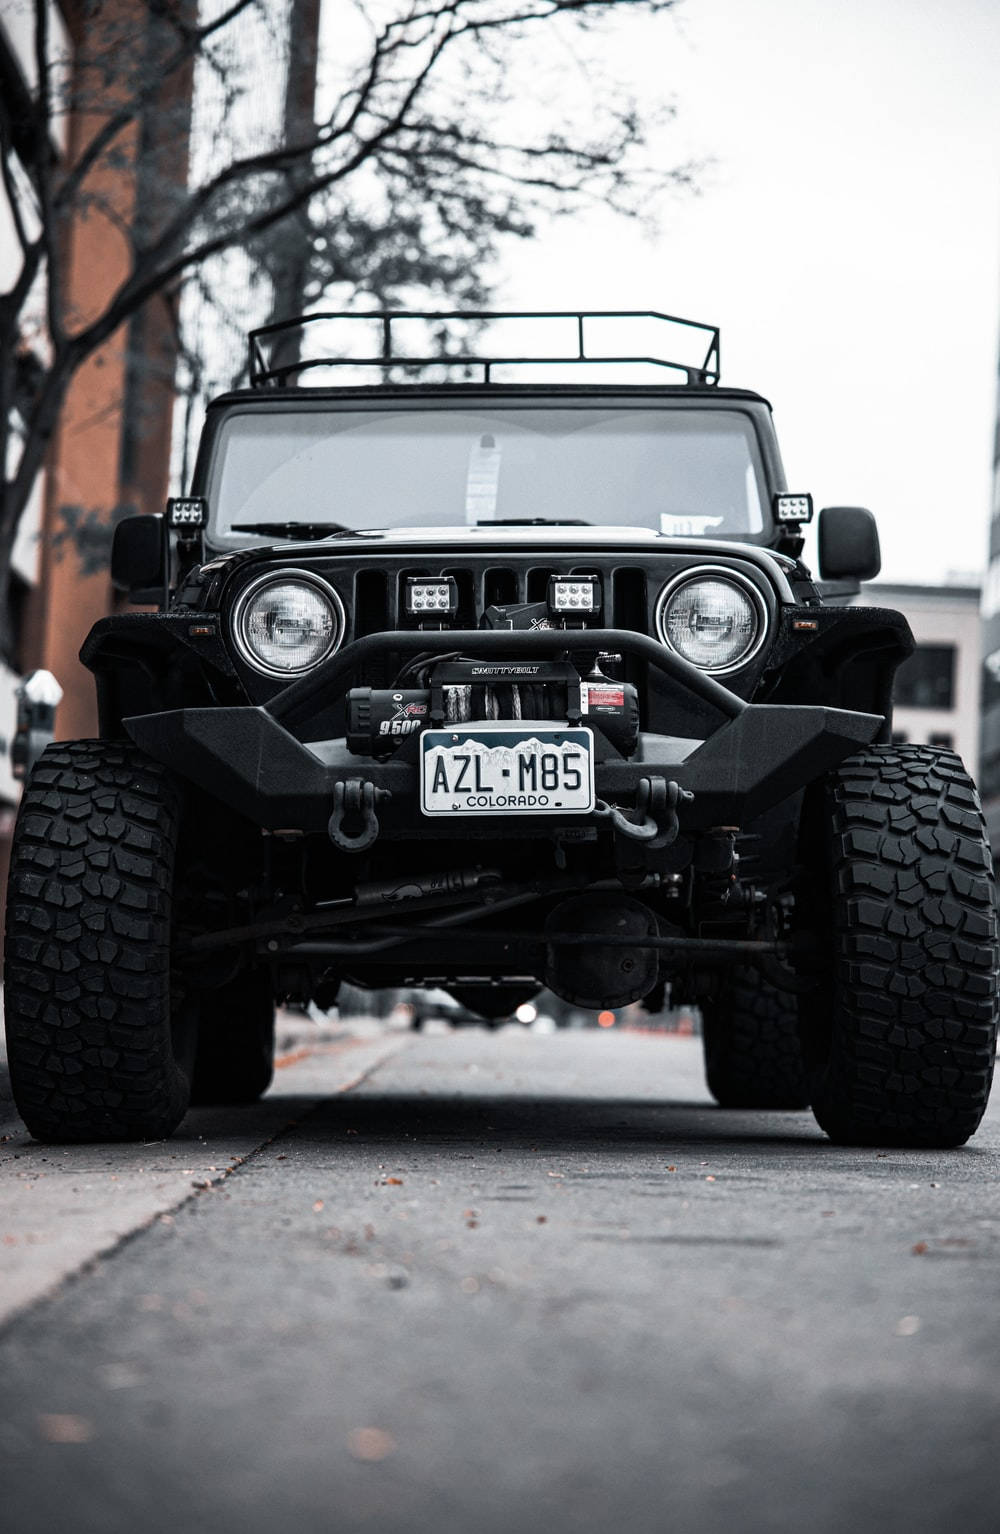 Black Jeep Wrangler With Huge Tires Background